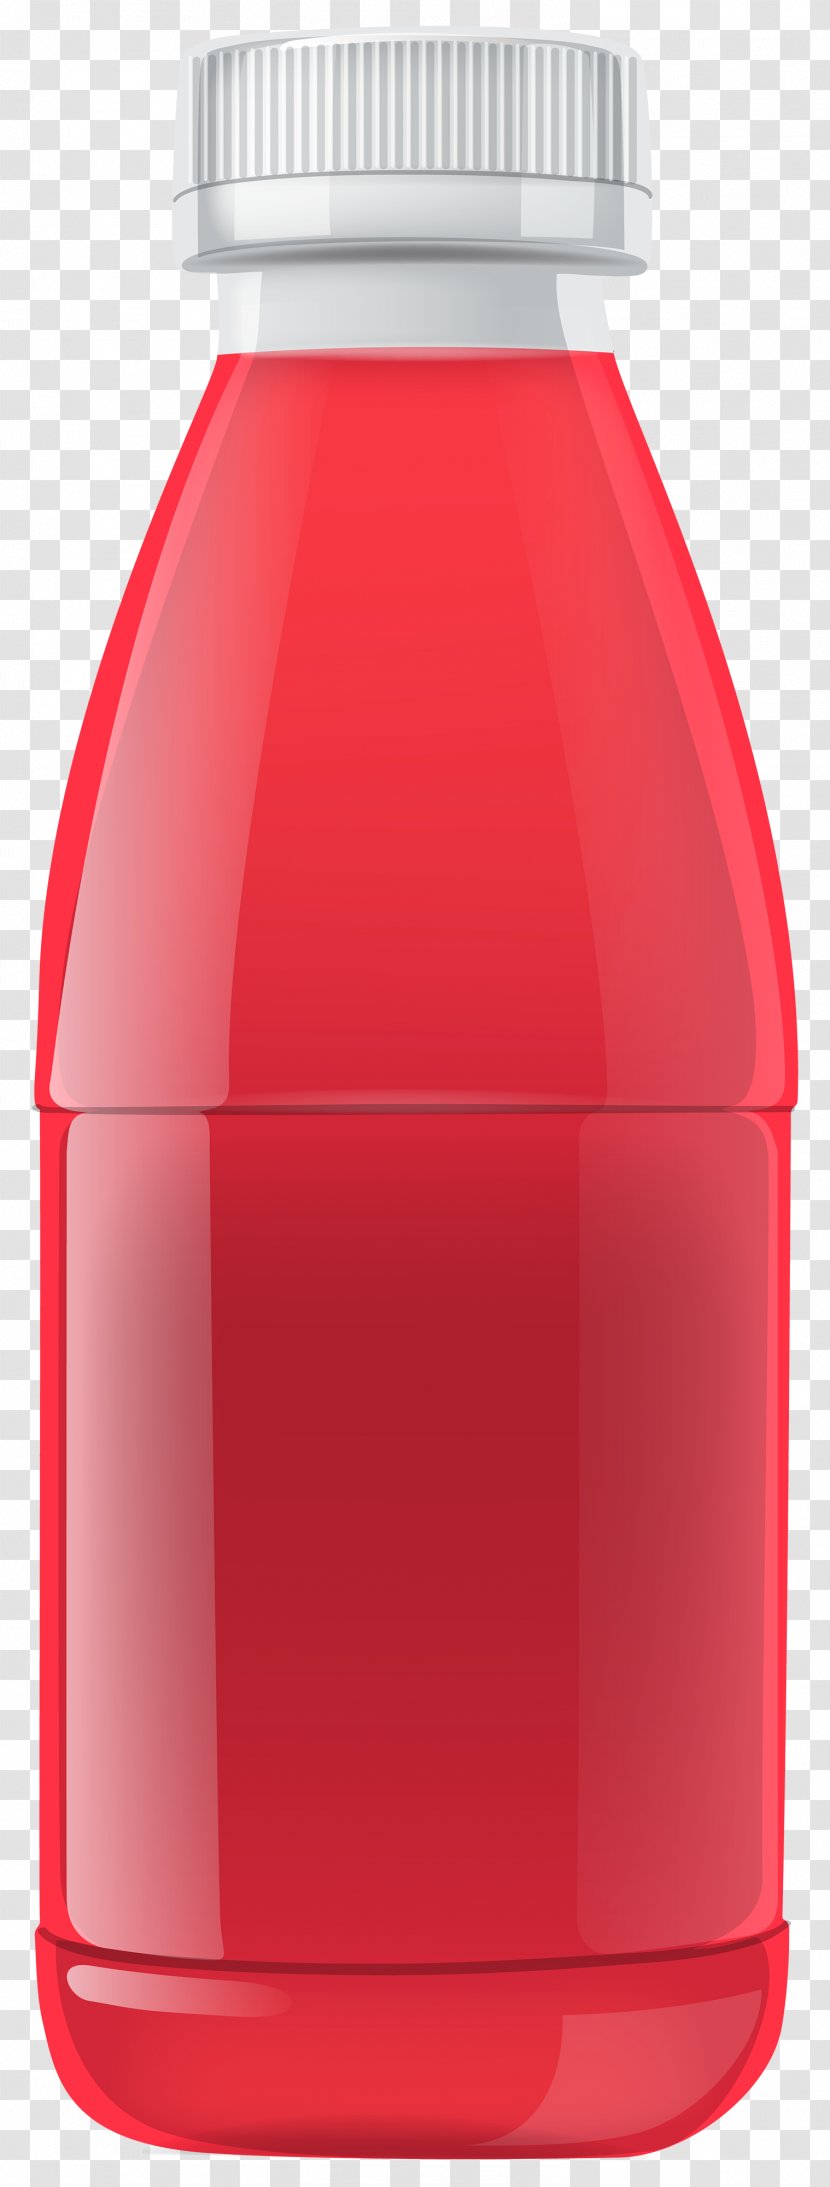 Juice Water Bottles Clip Art - Red - Fruit Juices Transparent PNG